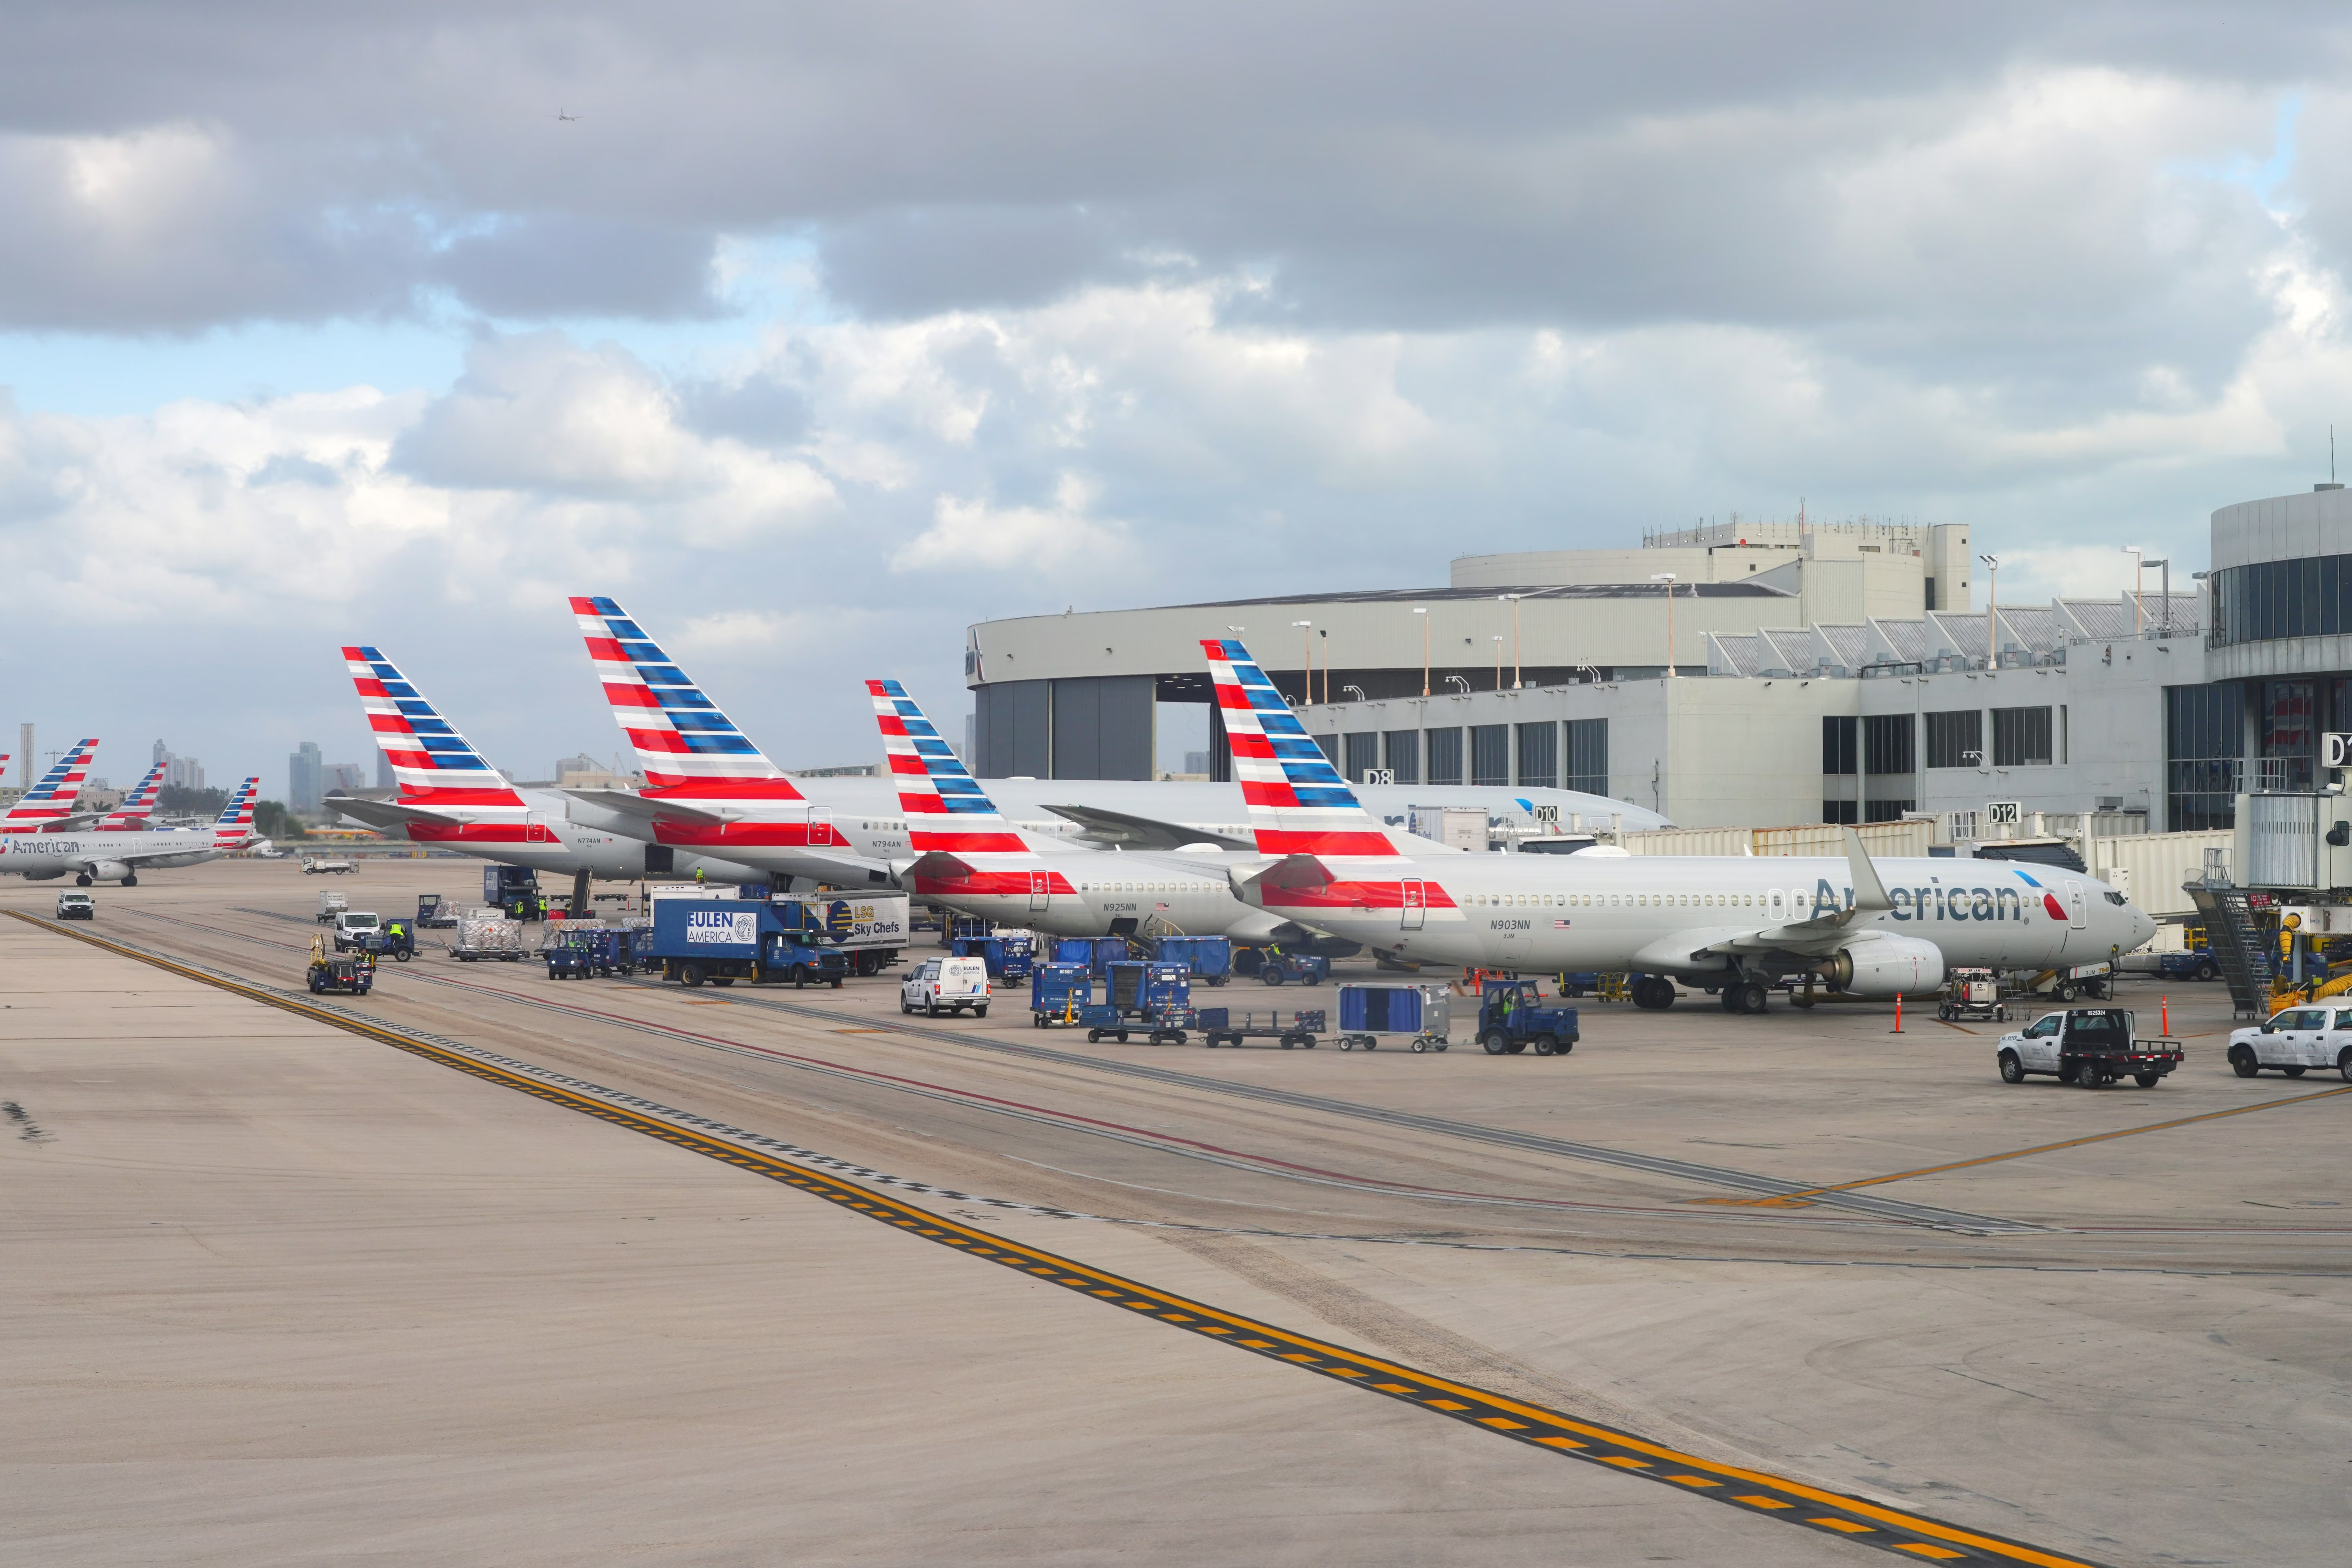 Several American Airlines aircraft at Miami International Airport.